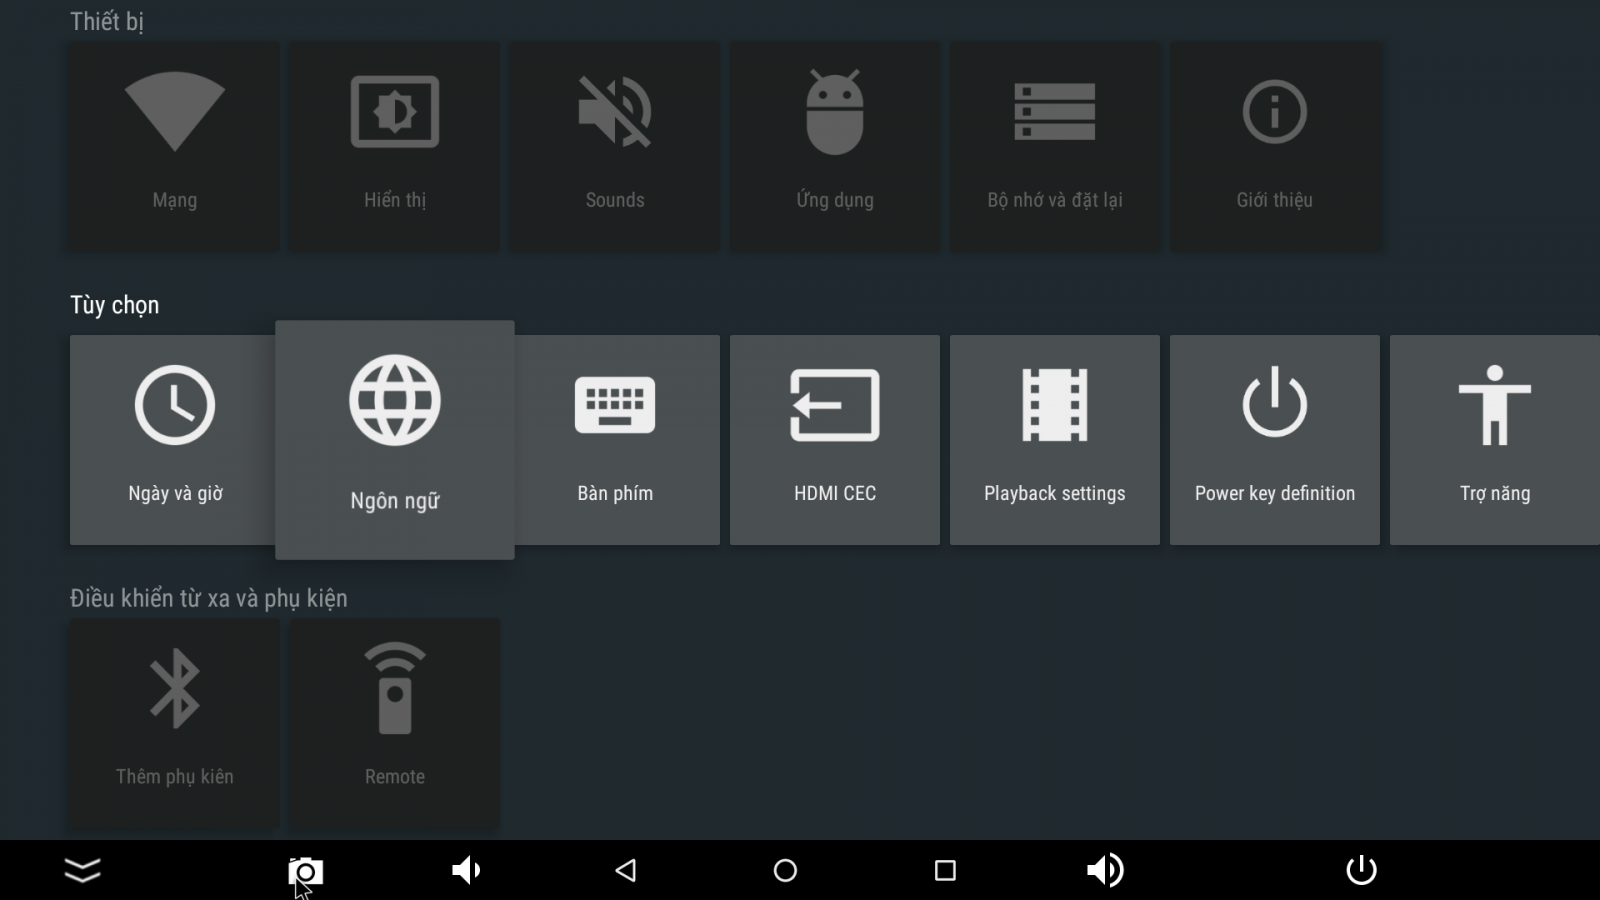 Smart Android TV Box Tanix Tx5 Pro 